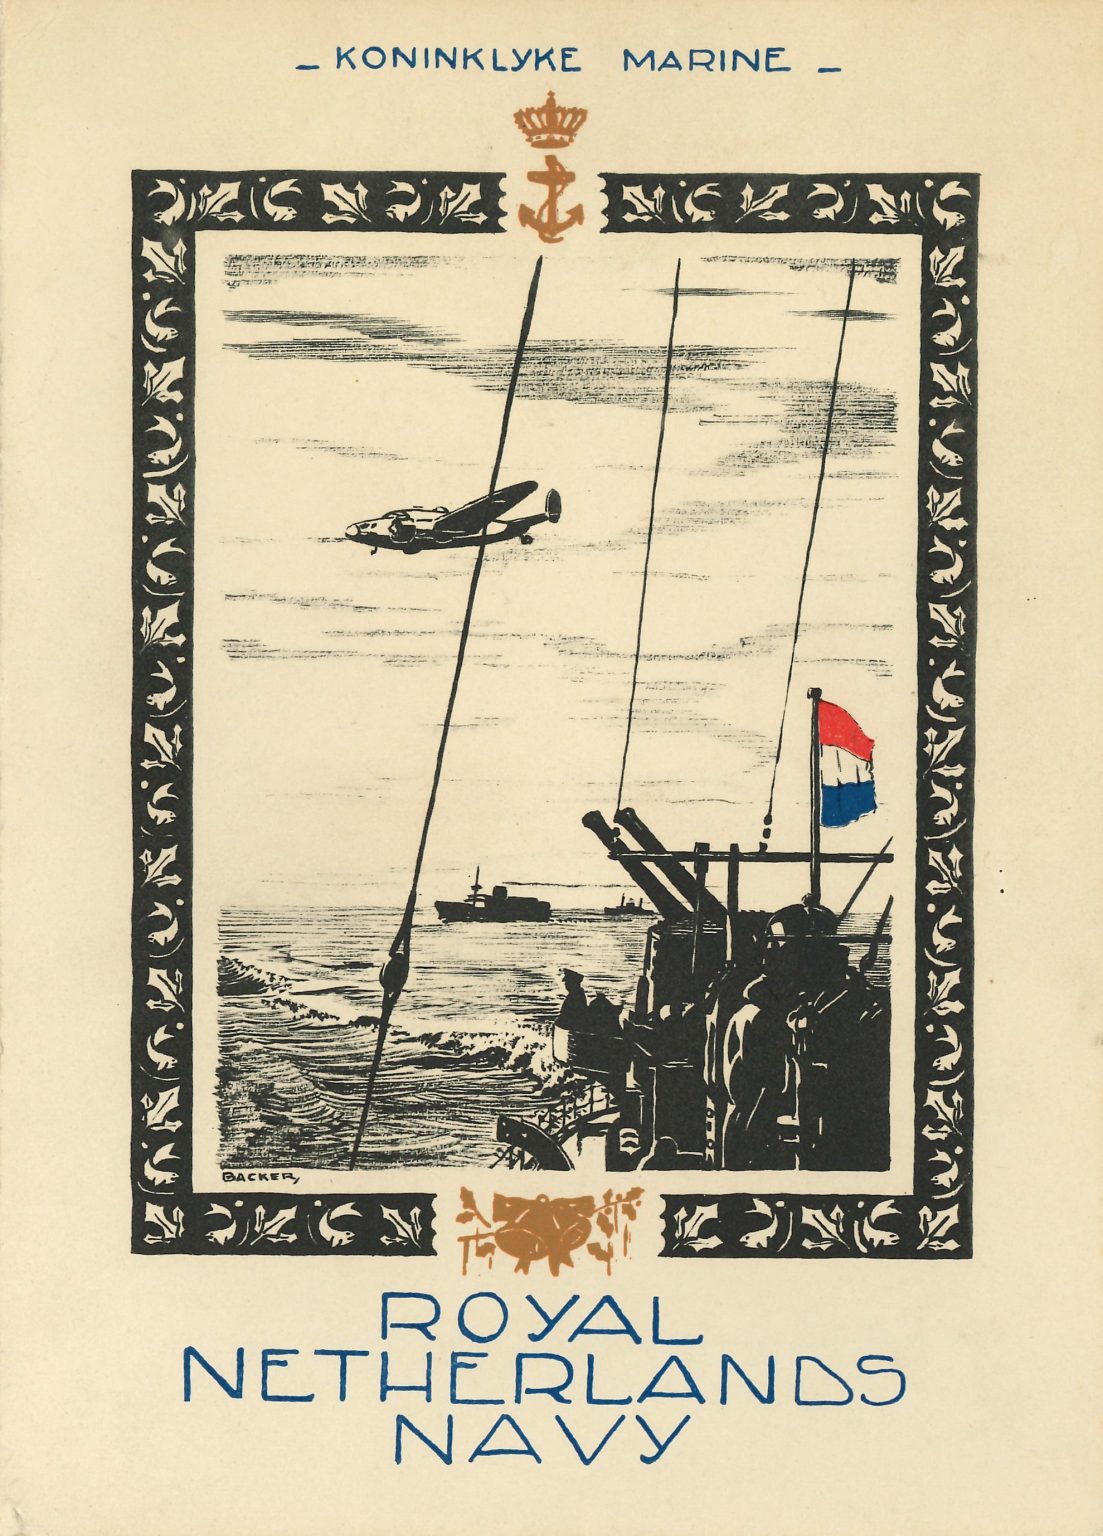 Royal Dutch Navy Christmas card from World War II